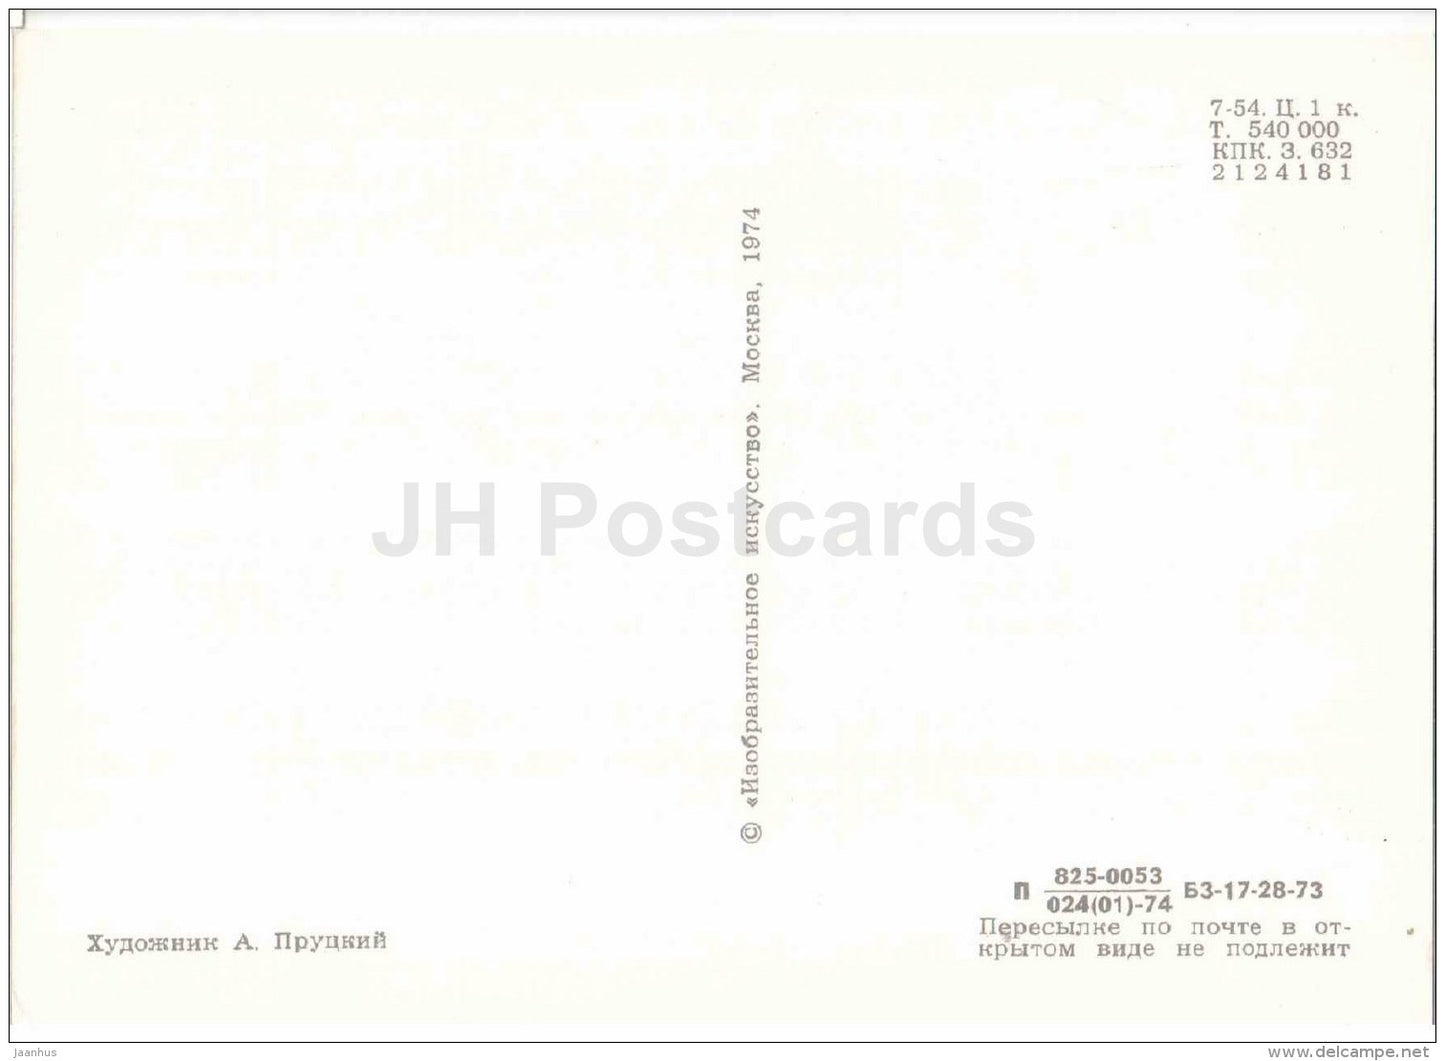 Mikhail Lermontov - Portraits of Russian Writers - 1974 - Russia USSR - unused - JH Postcards